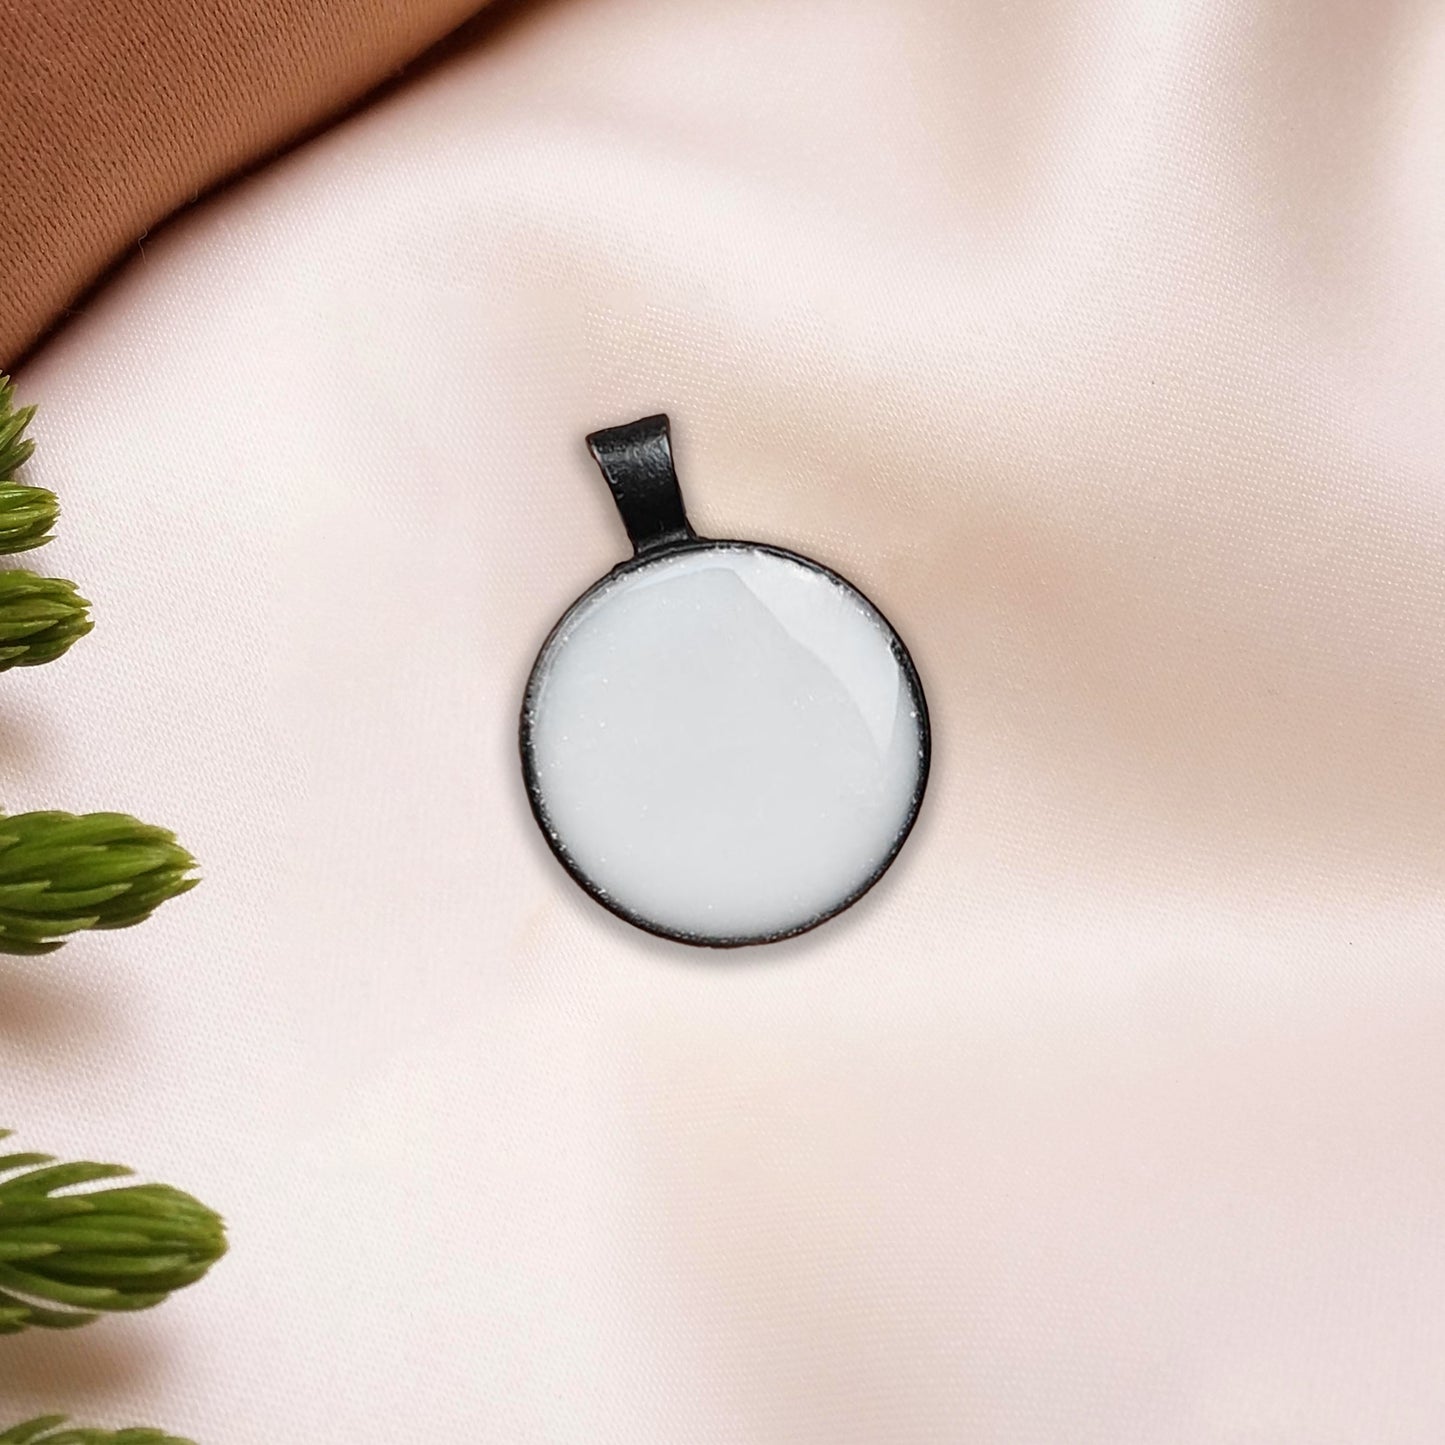 Black Posh Round Pendant with Breastmilk Jewelry DIY Kit